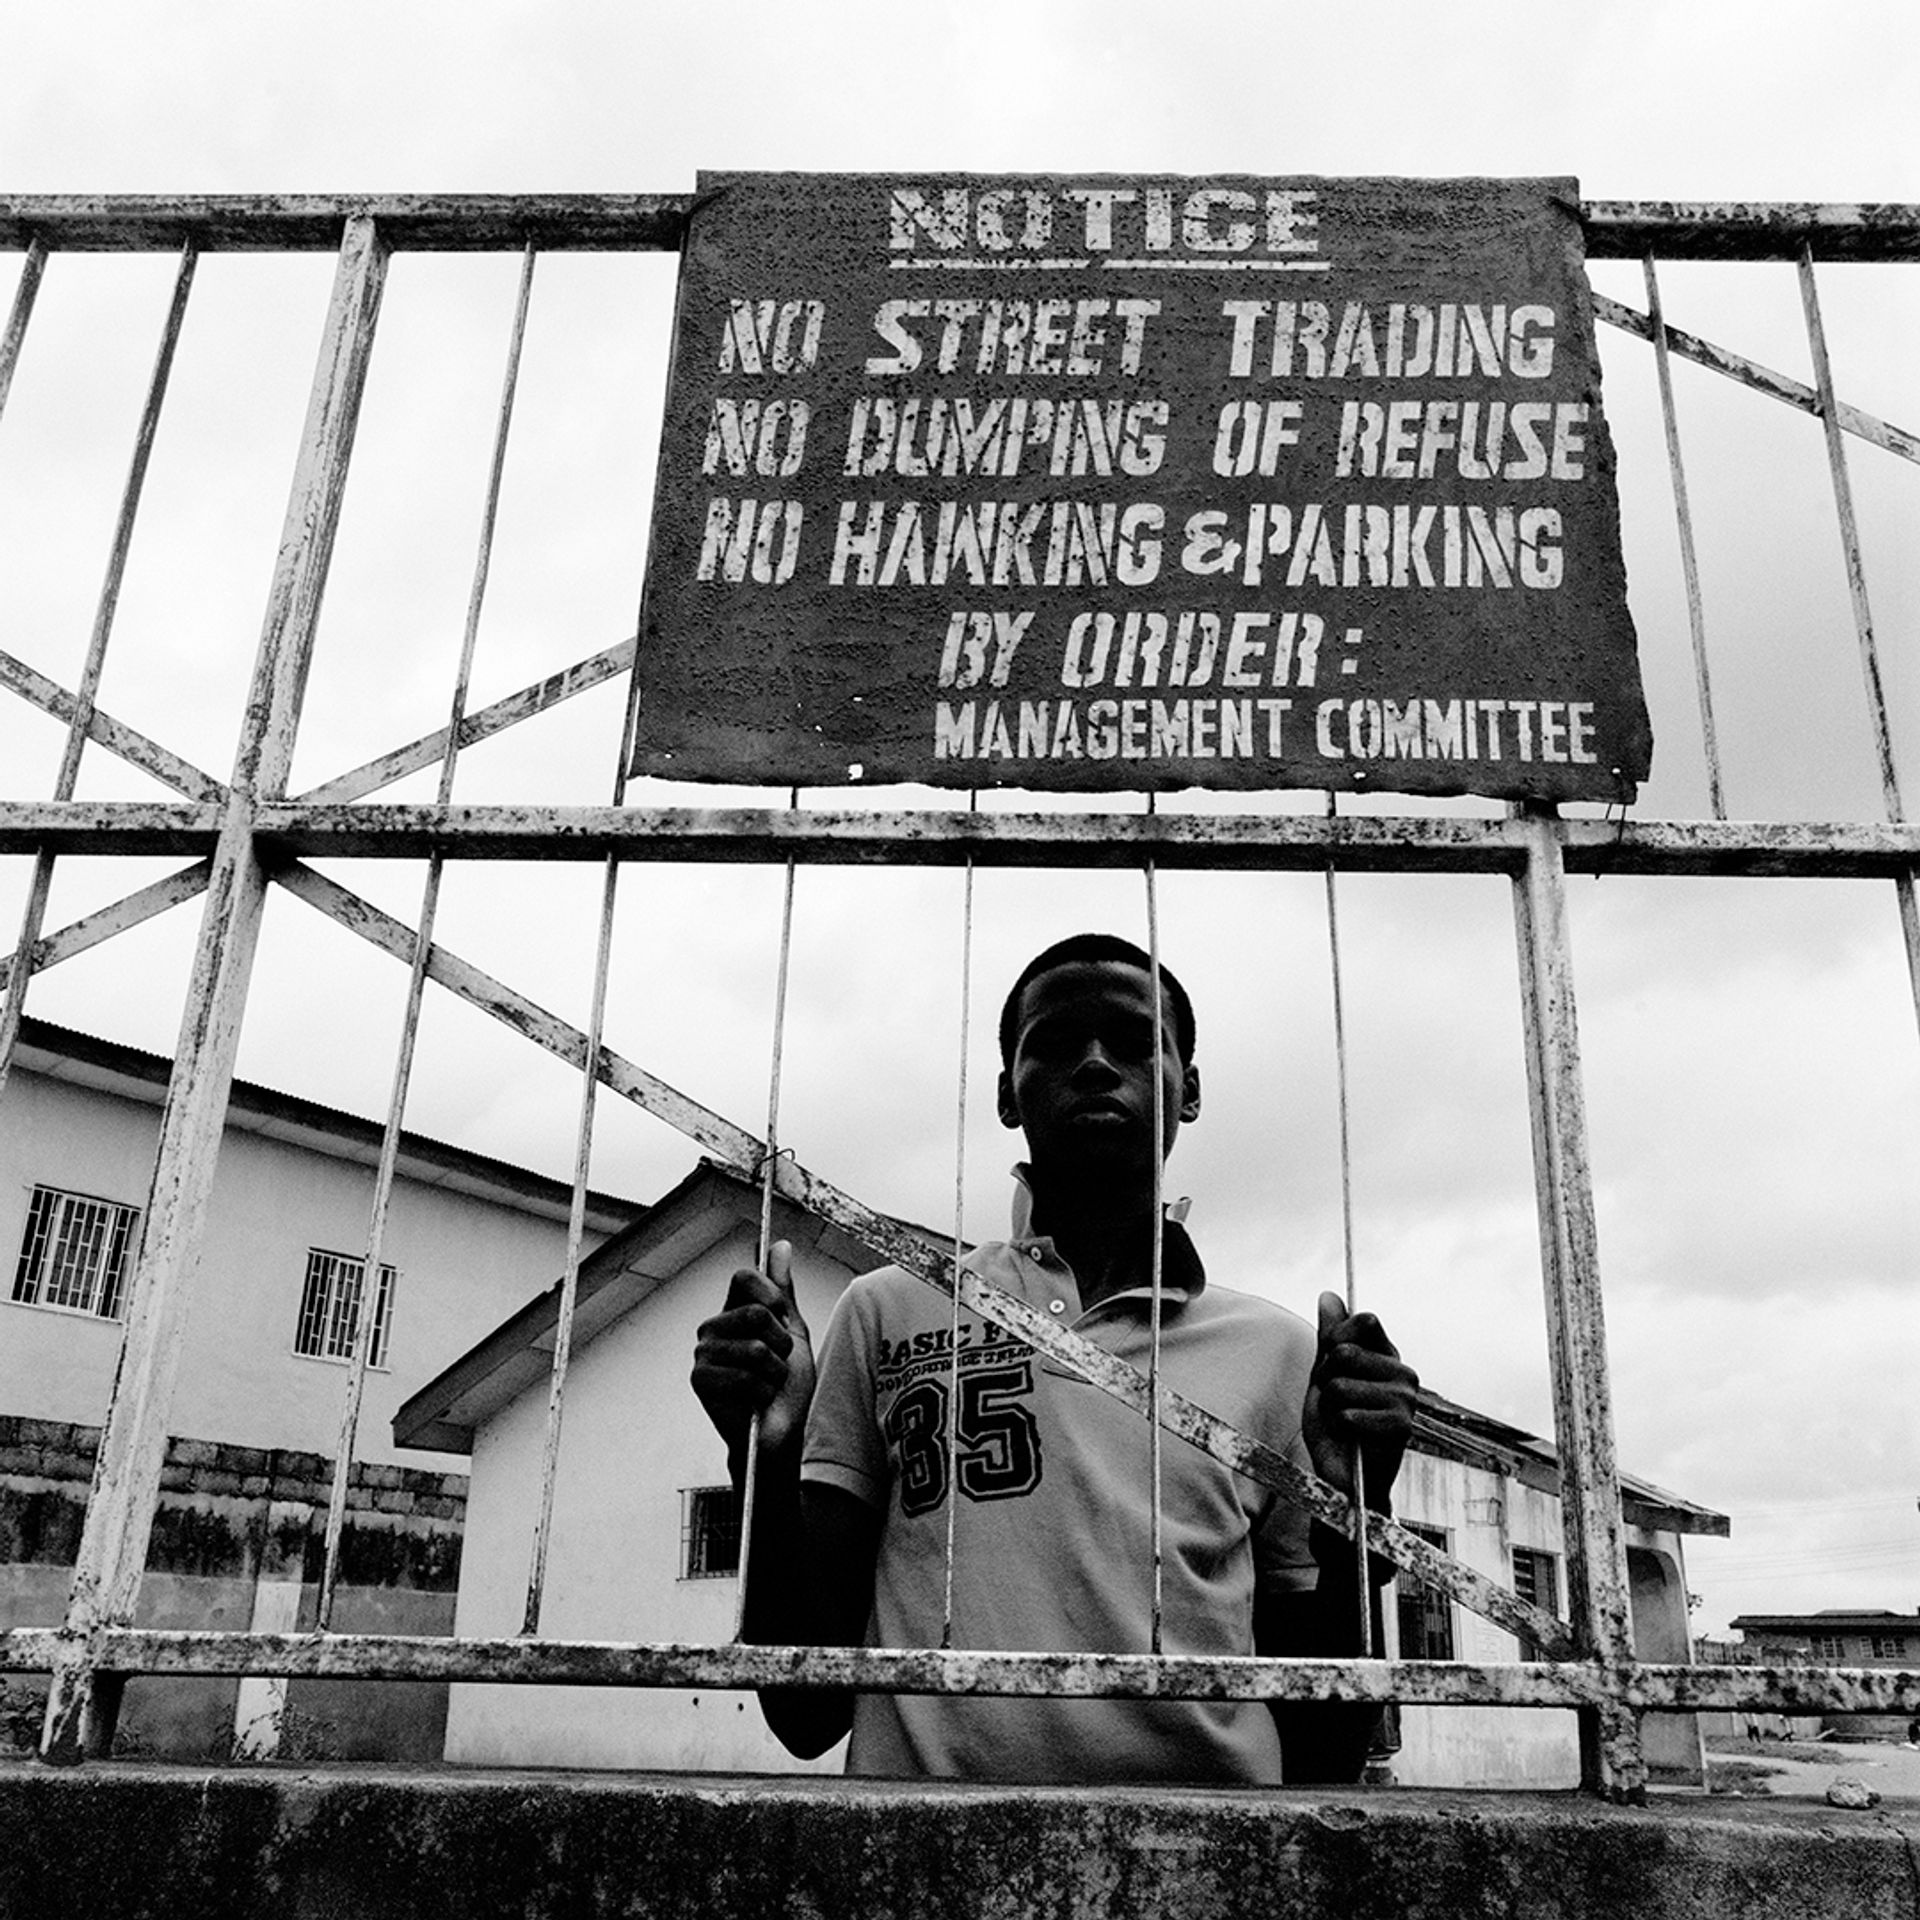 Fiat by the Nigerian photographer Uche Okpa-Iroha Courtesy of Retro Africa and the artist